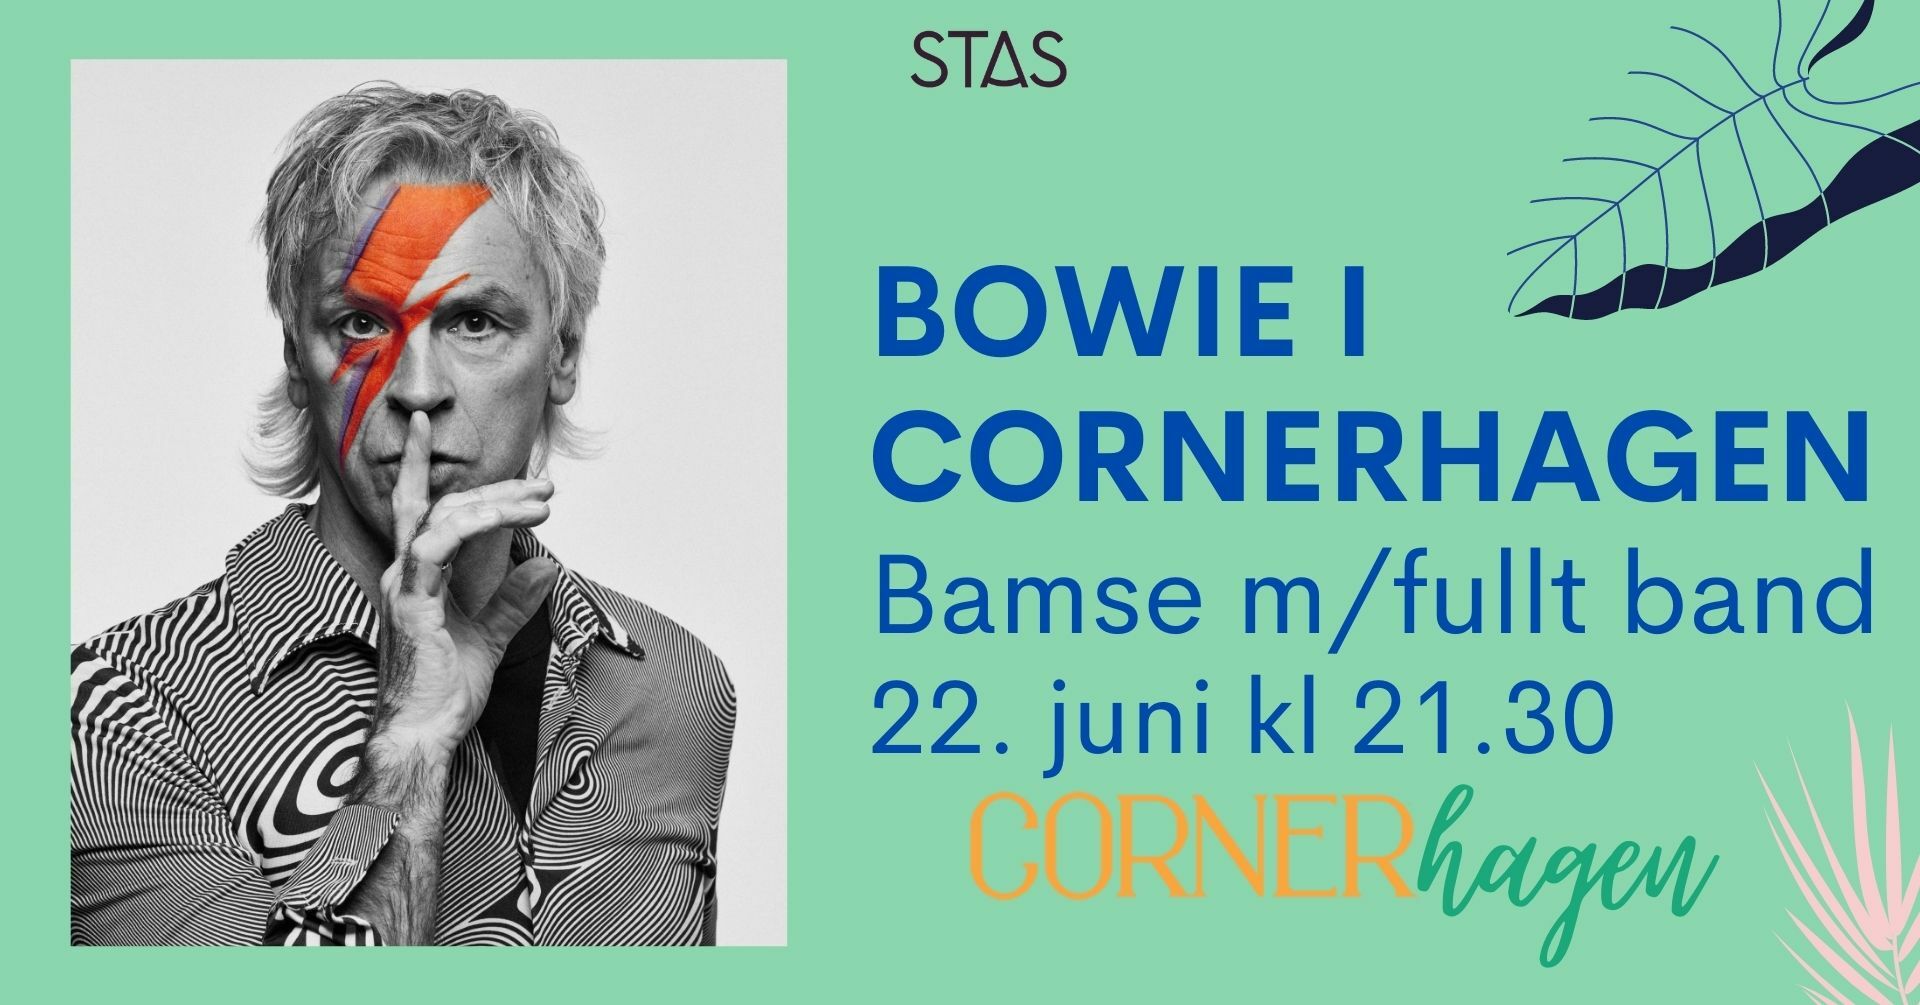 Bowie i Cornerhagen  - Stas 